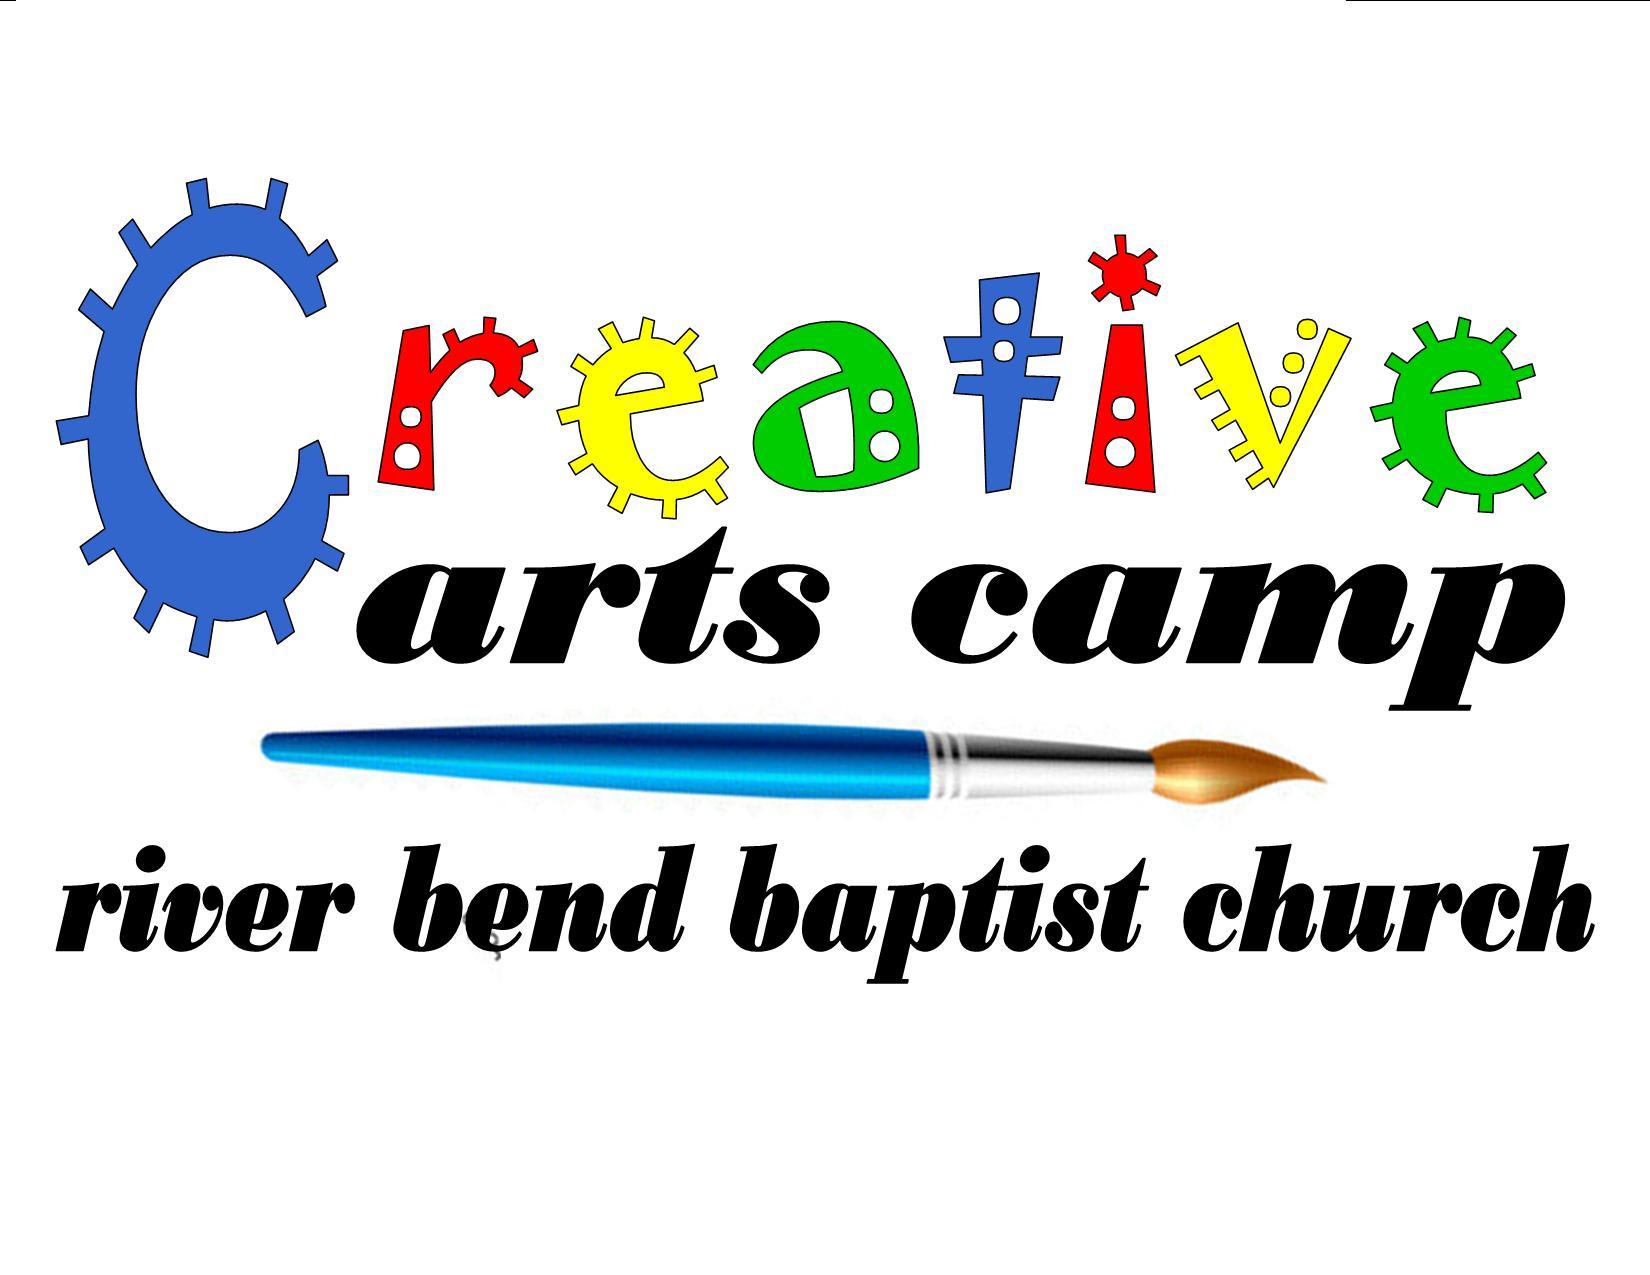 Church Camp Logo - Creative Arts Camp logo – River Bend Baptist Church